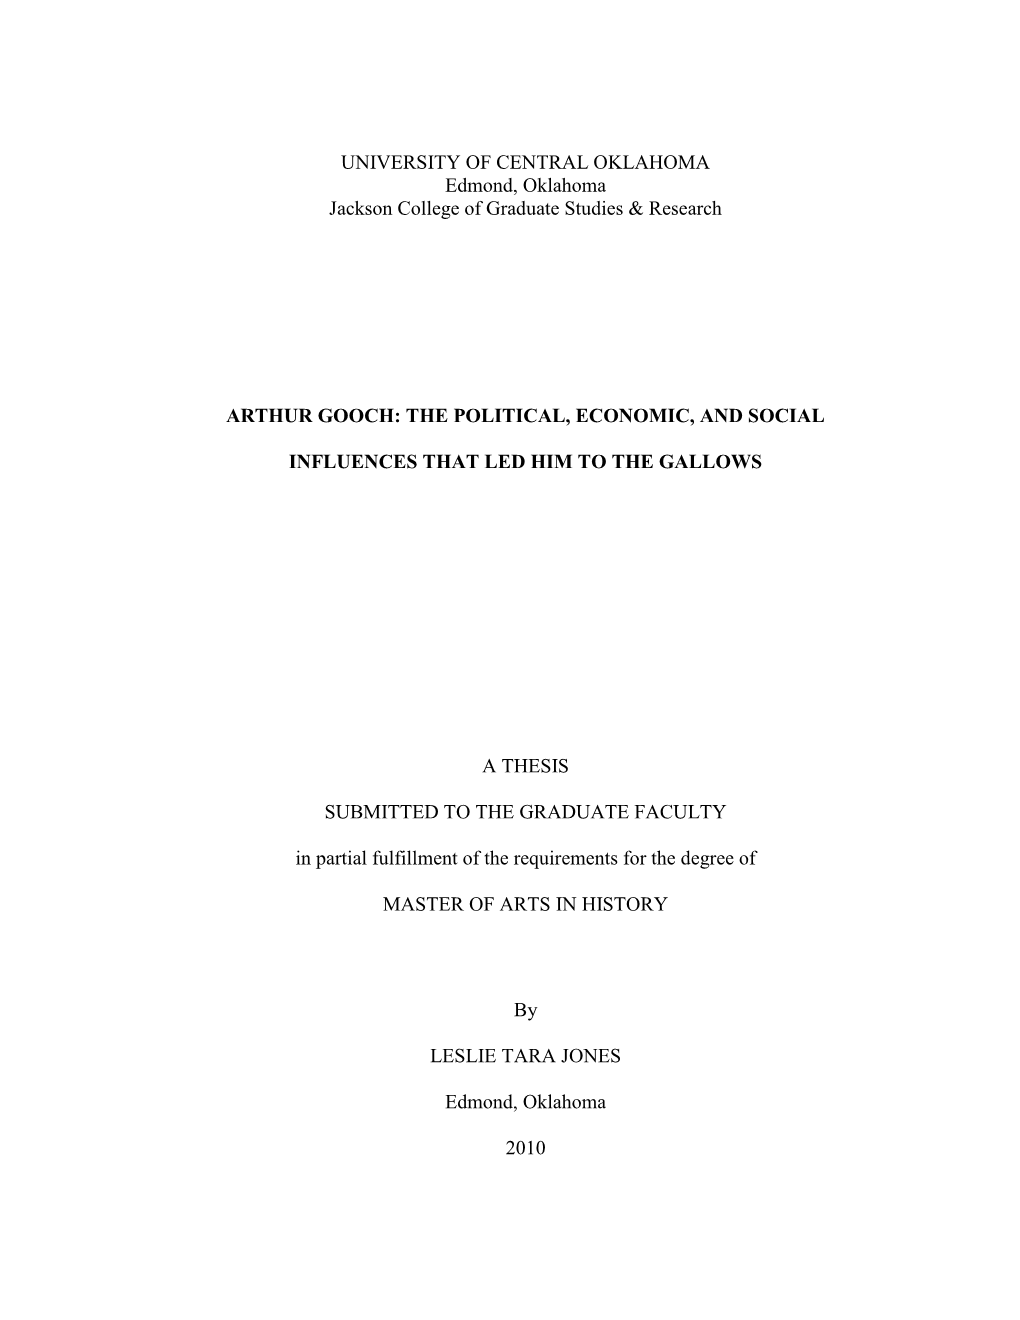 UNIVERSITY of CENTRAL OKLAHOMA Edmond, Oklahoma Jackson College of Graduate Studies & Research ARTHUR GOOCH: the POLITICAL